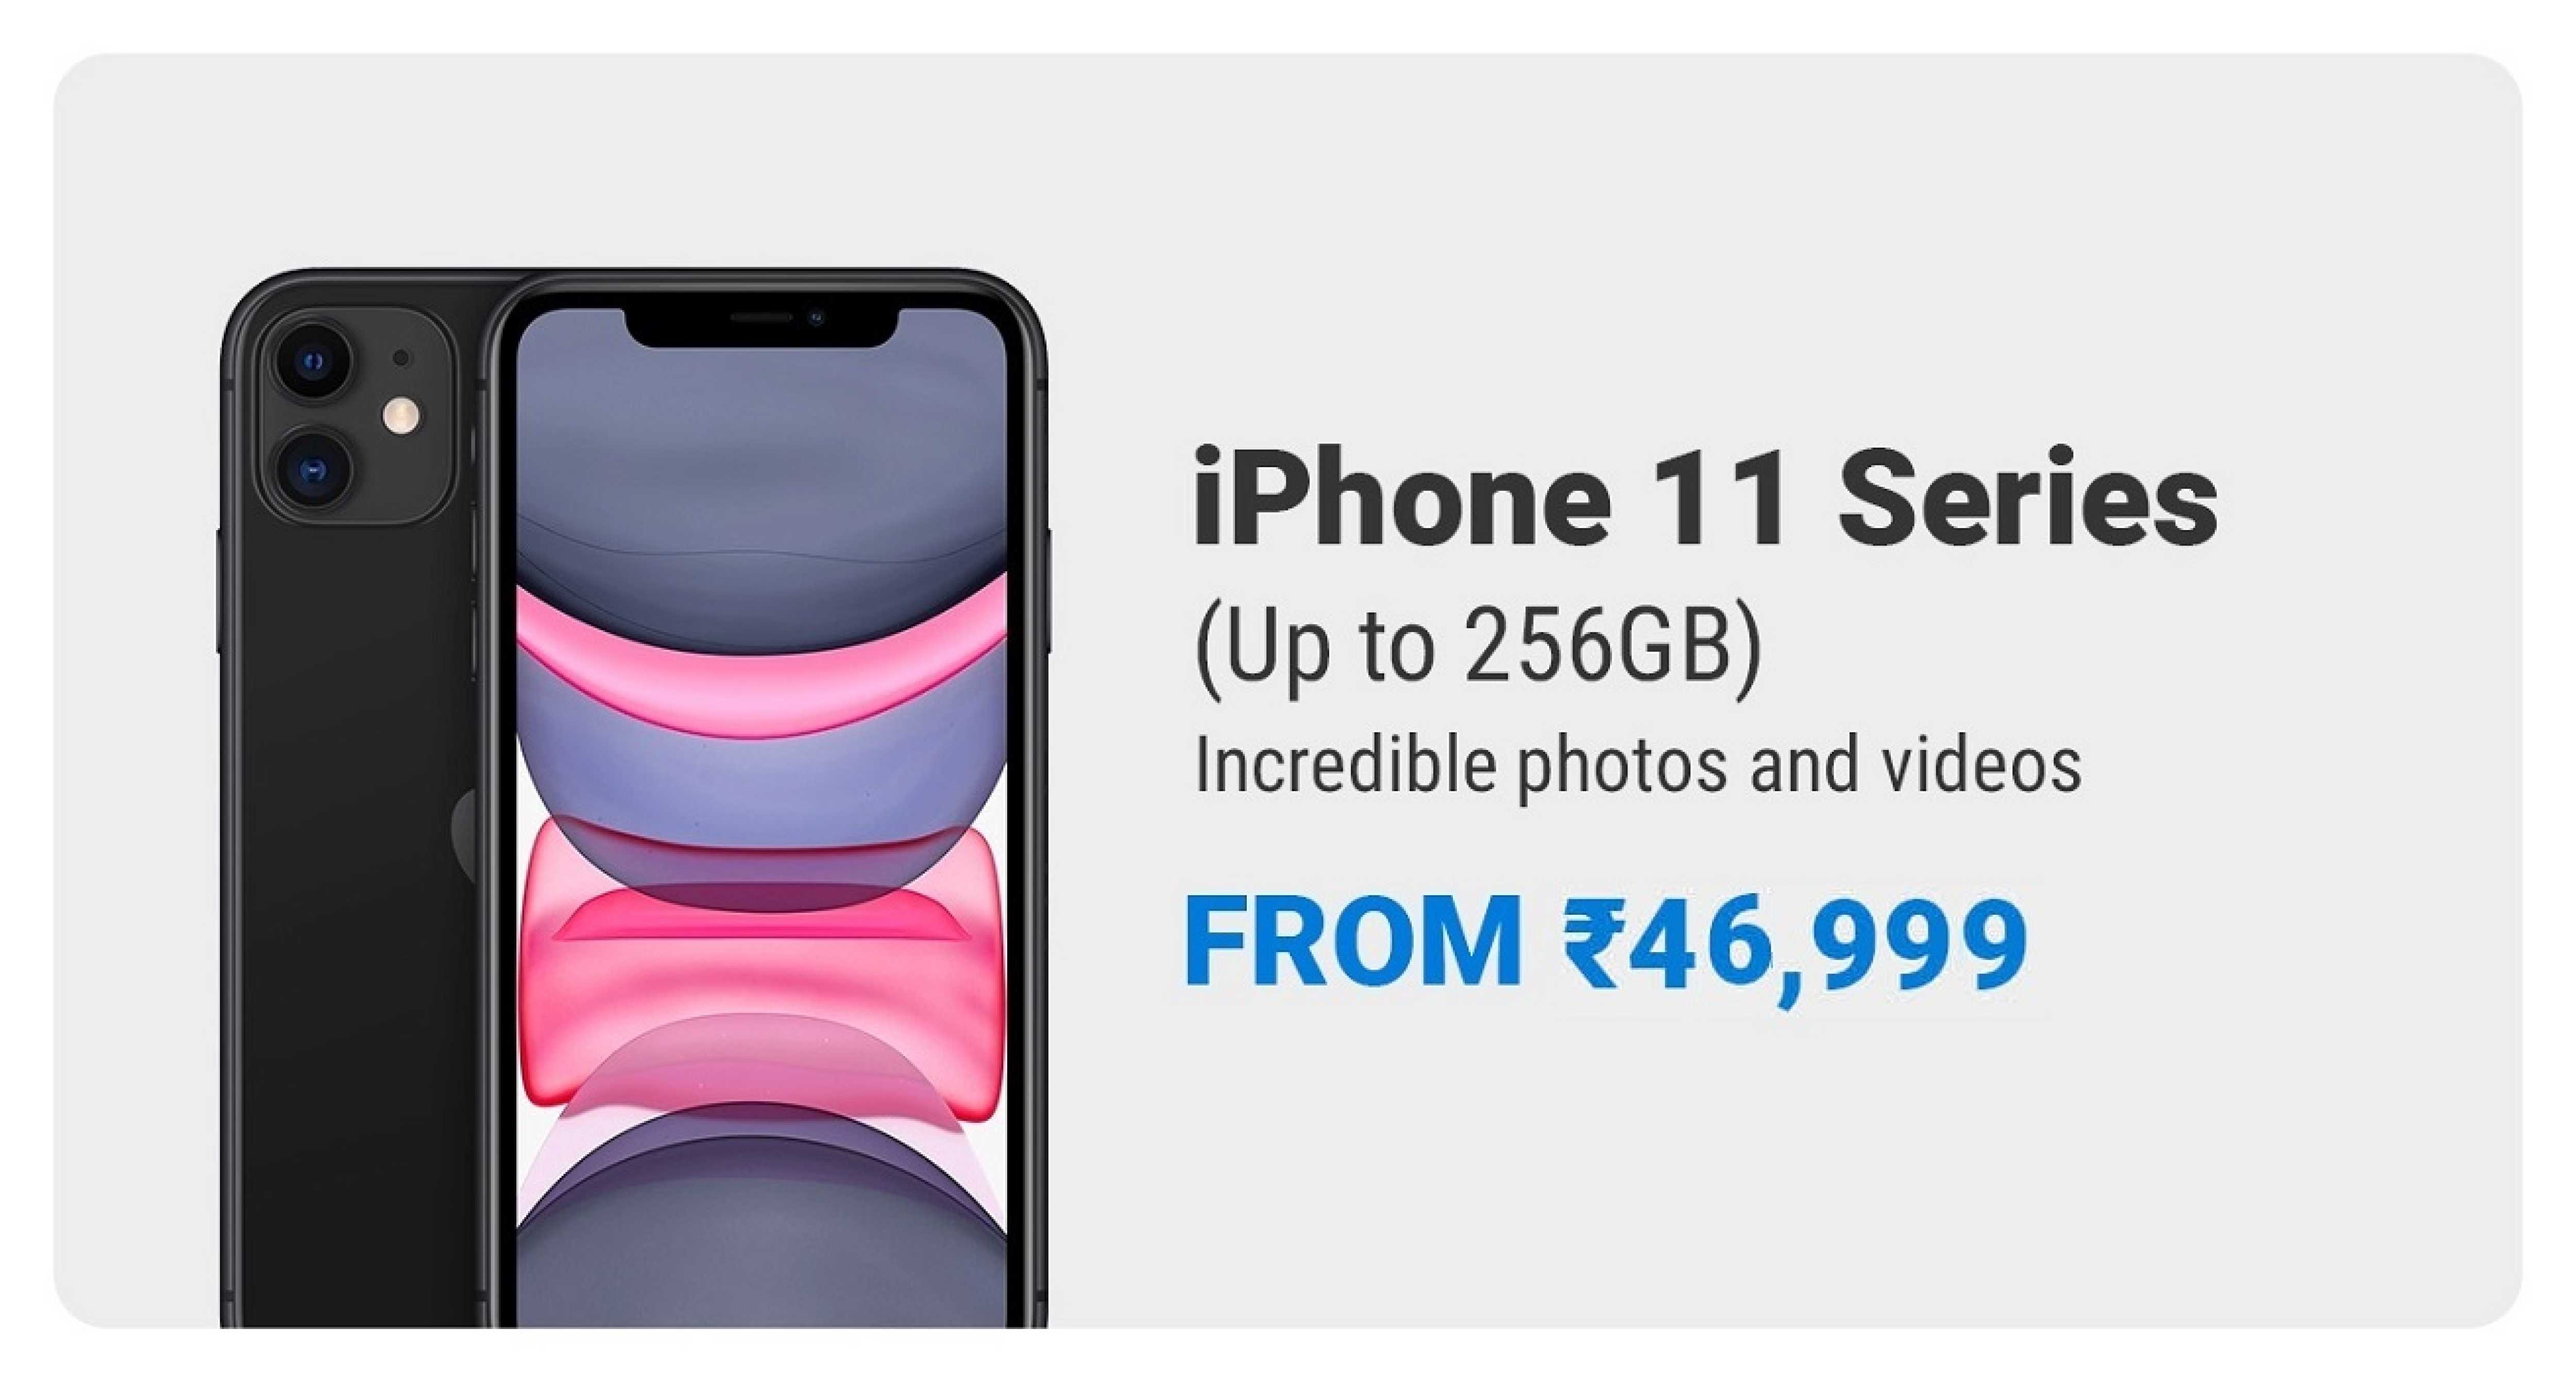 Flipkart - IPhone 11 Smartphone starting at just ₹41999